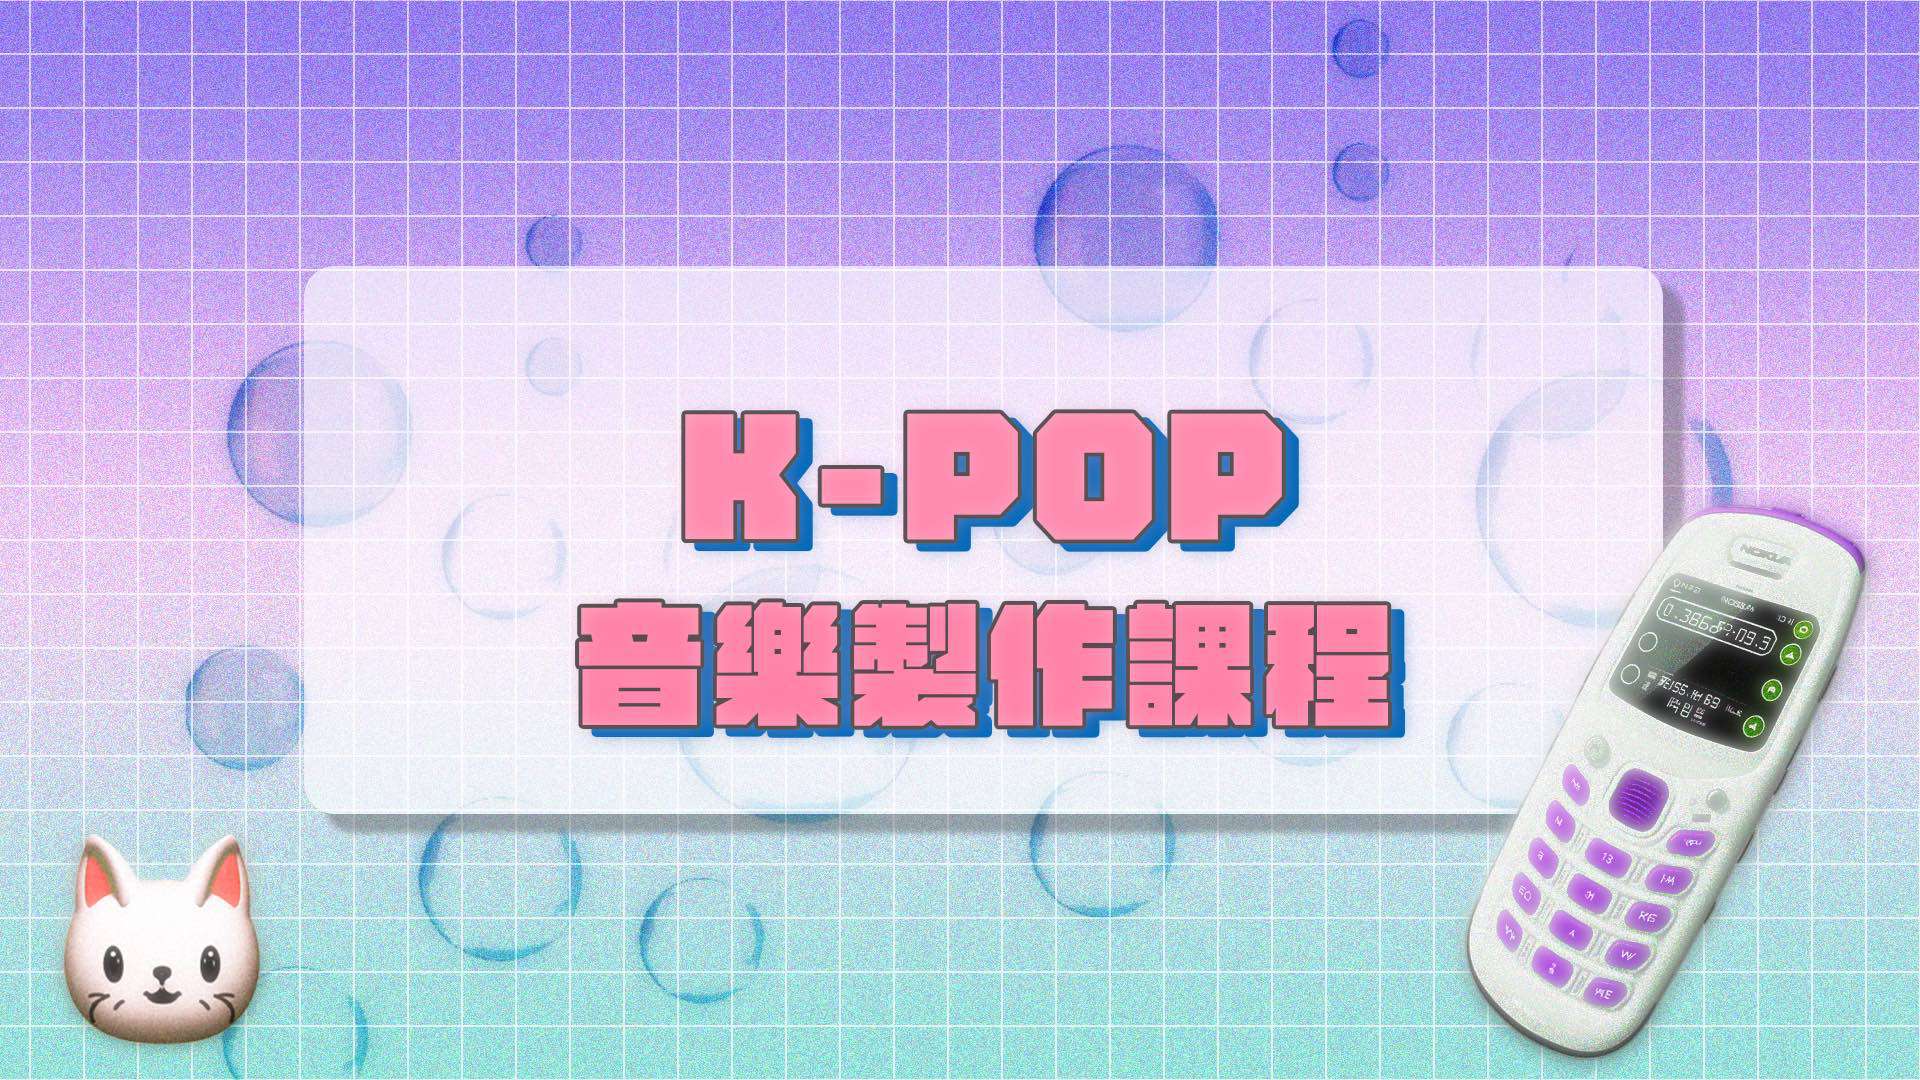 K-POP 潮流舞曲編曲製作課｜從製作心法、音色設計、到鼓組編排，打造屬於自己的 K-POP Music